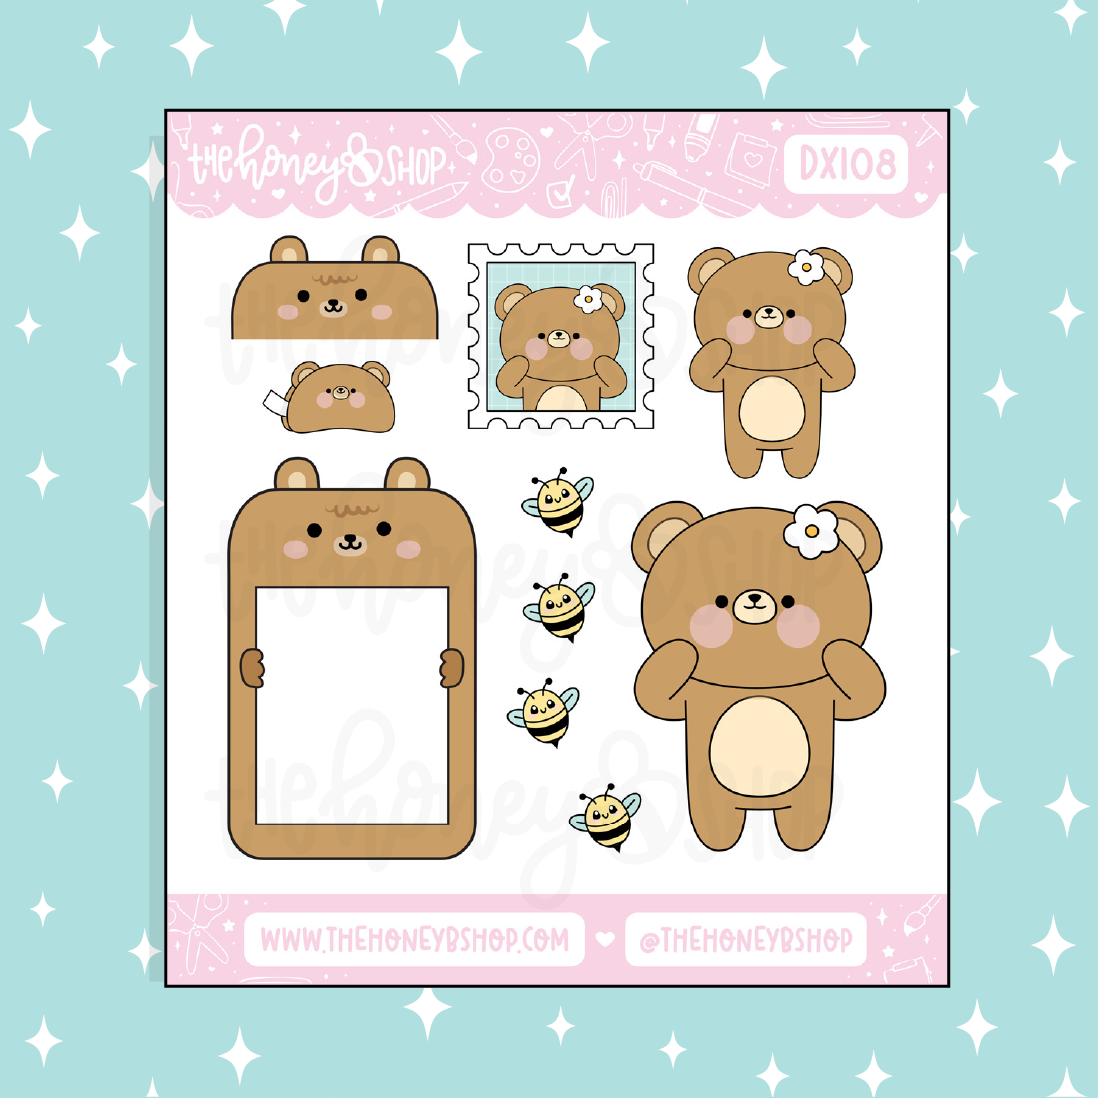 Beary Cute Sampler Doodle Sticker